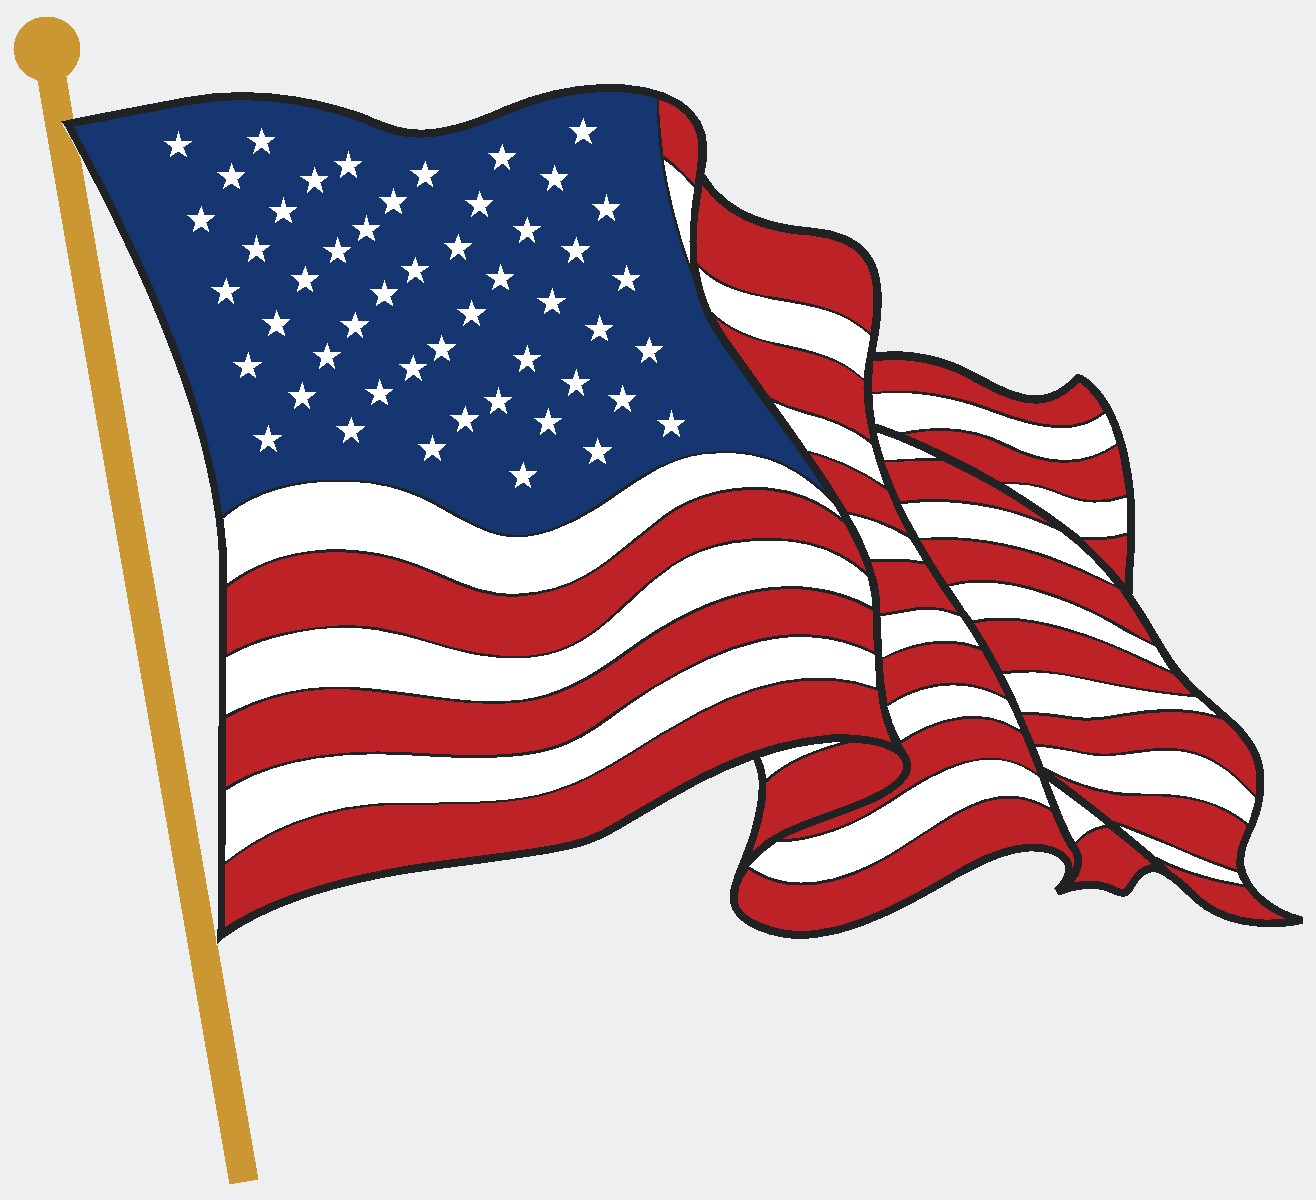 ... American flag free flag clip art clipart cliparting 3 - Cliparting clipartall.com ...